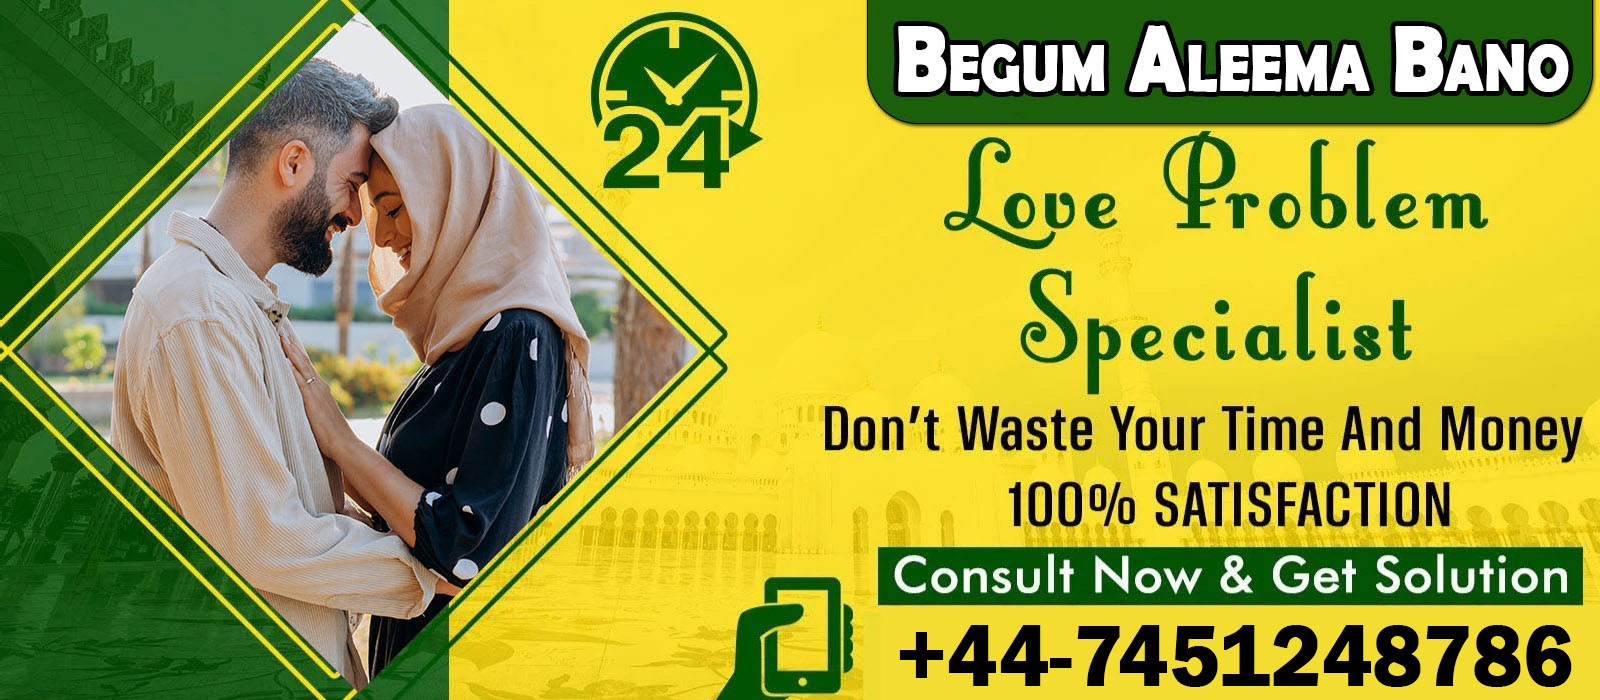 Begum Aleema Bano +44-7451248786banner